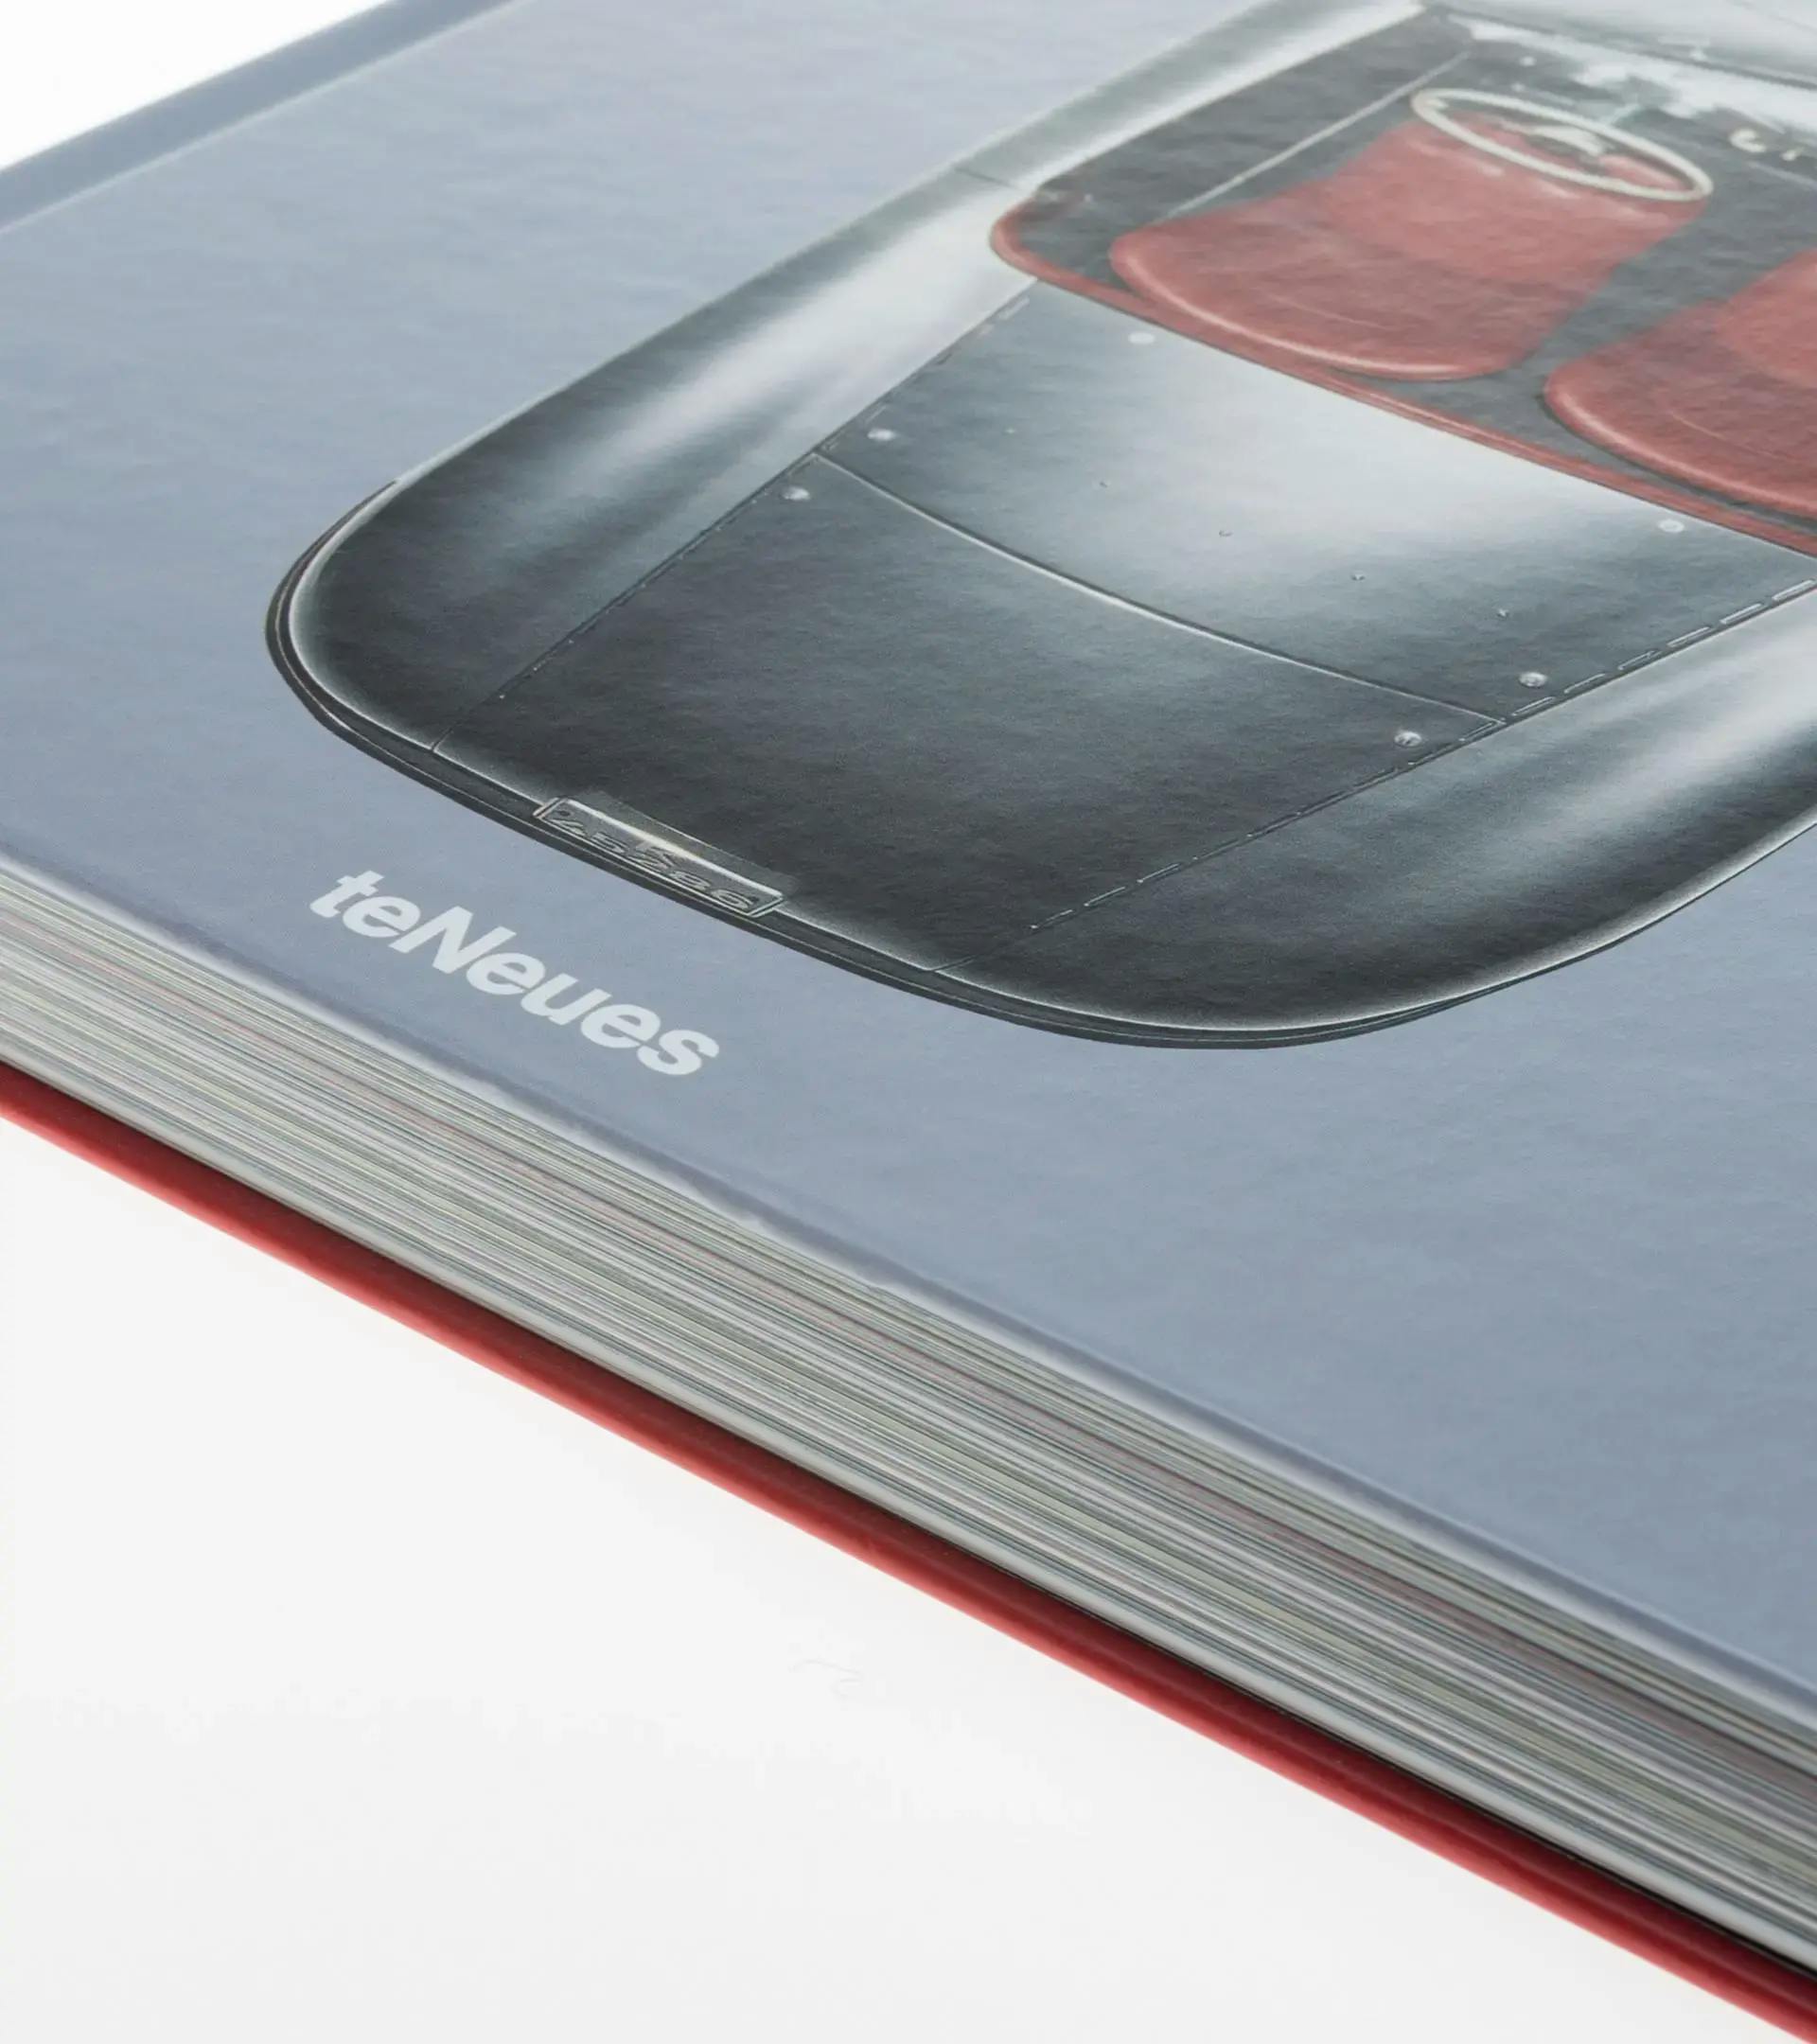 The Porsche Book - The Best Porsche Images by Frank M. Orel 3